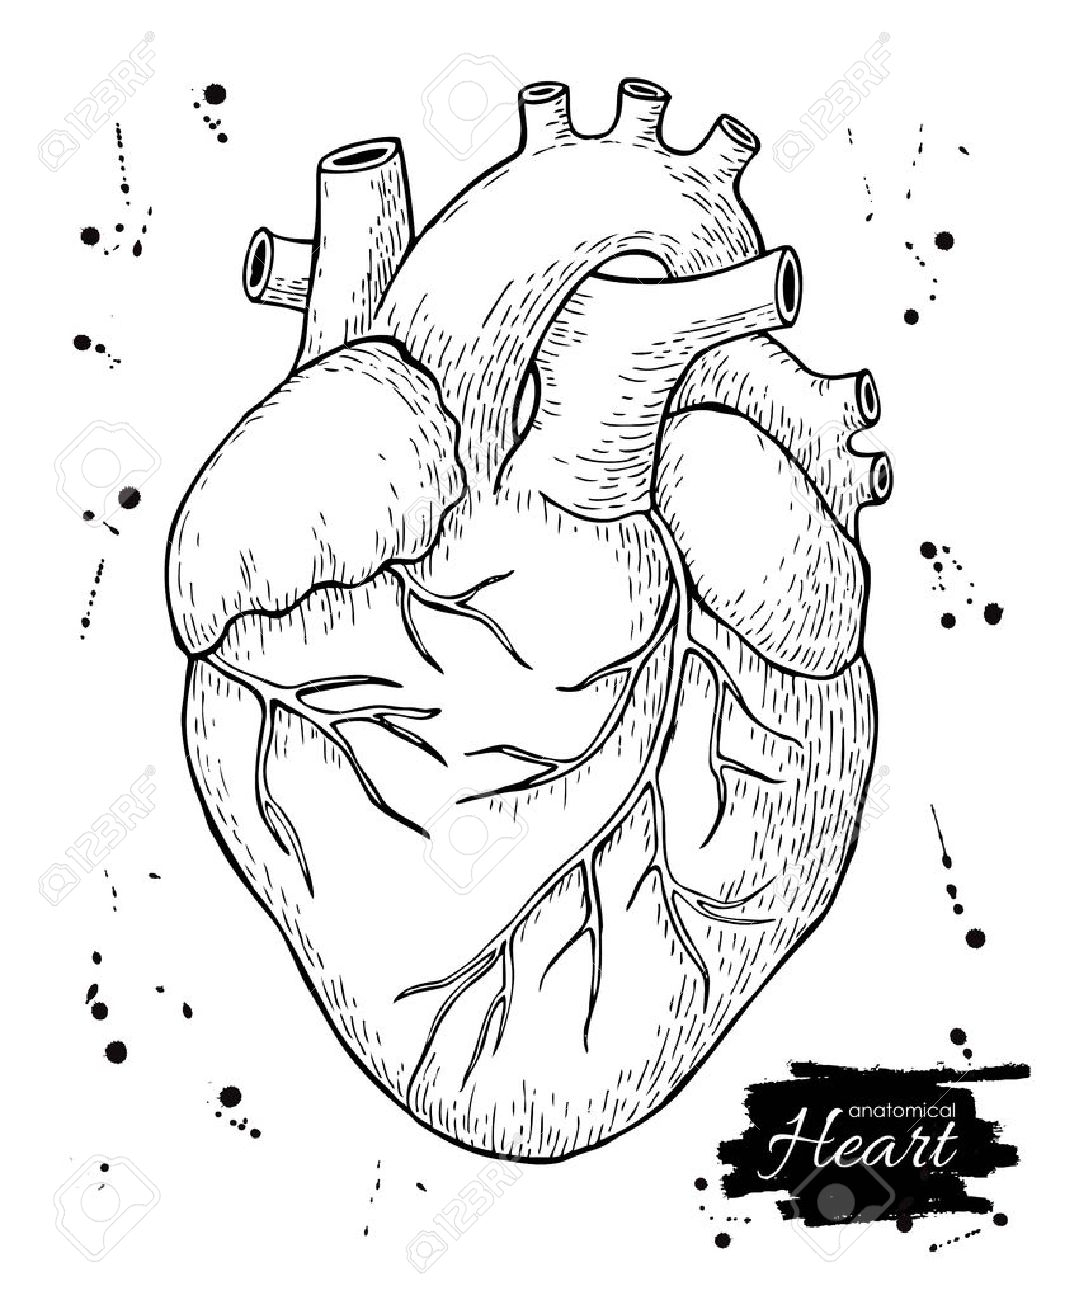 Heart Anatomical Drawing at GetDrawings Free download